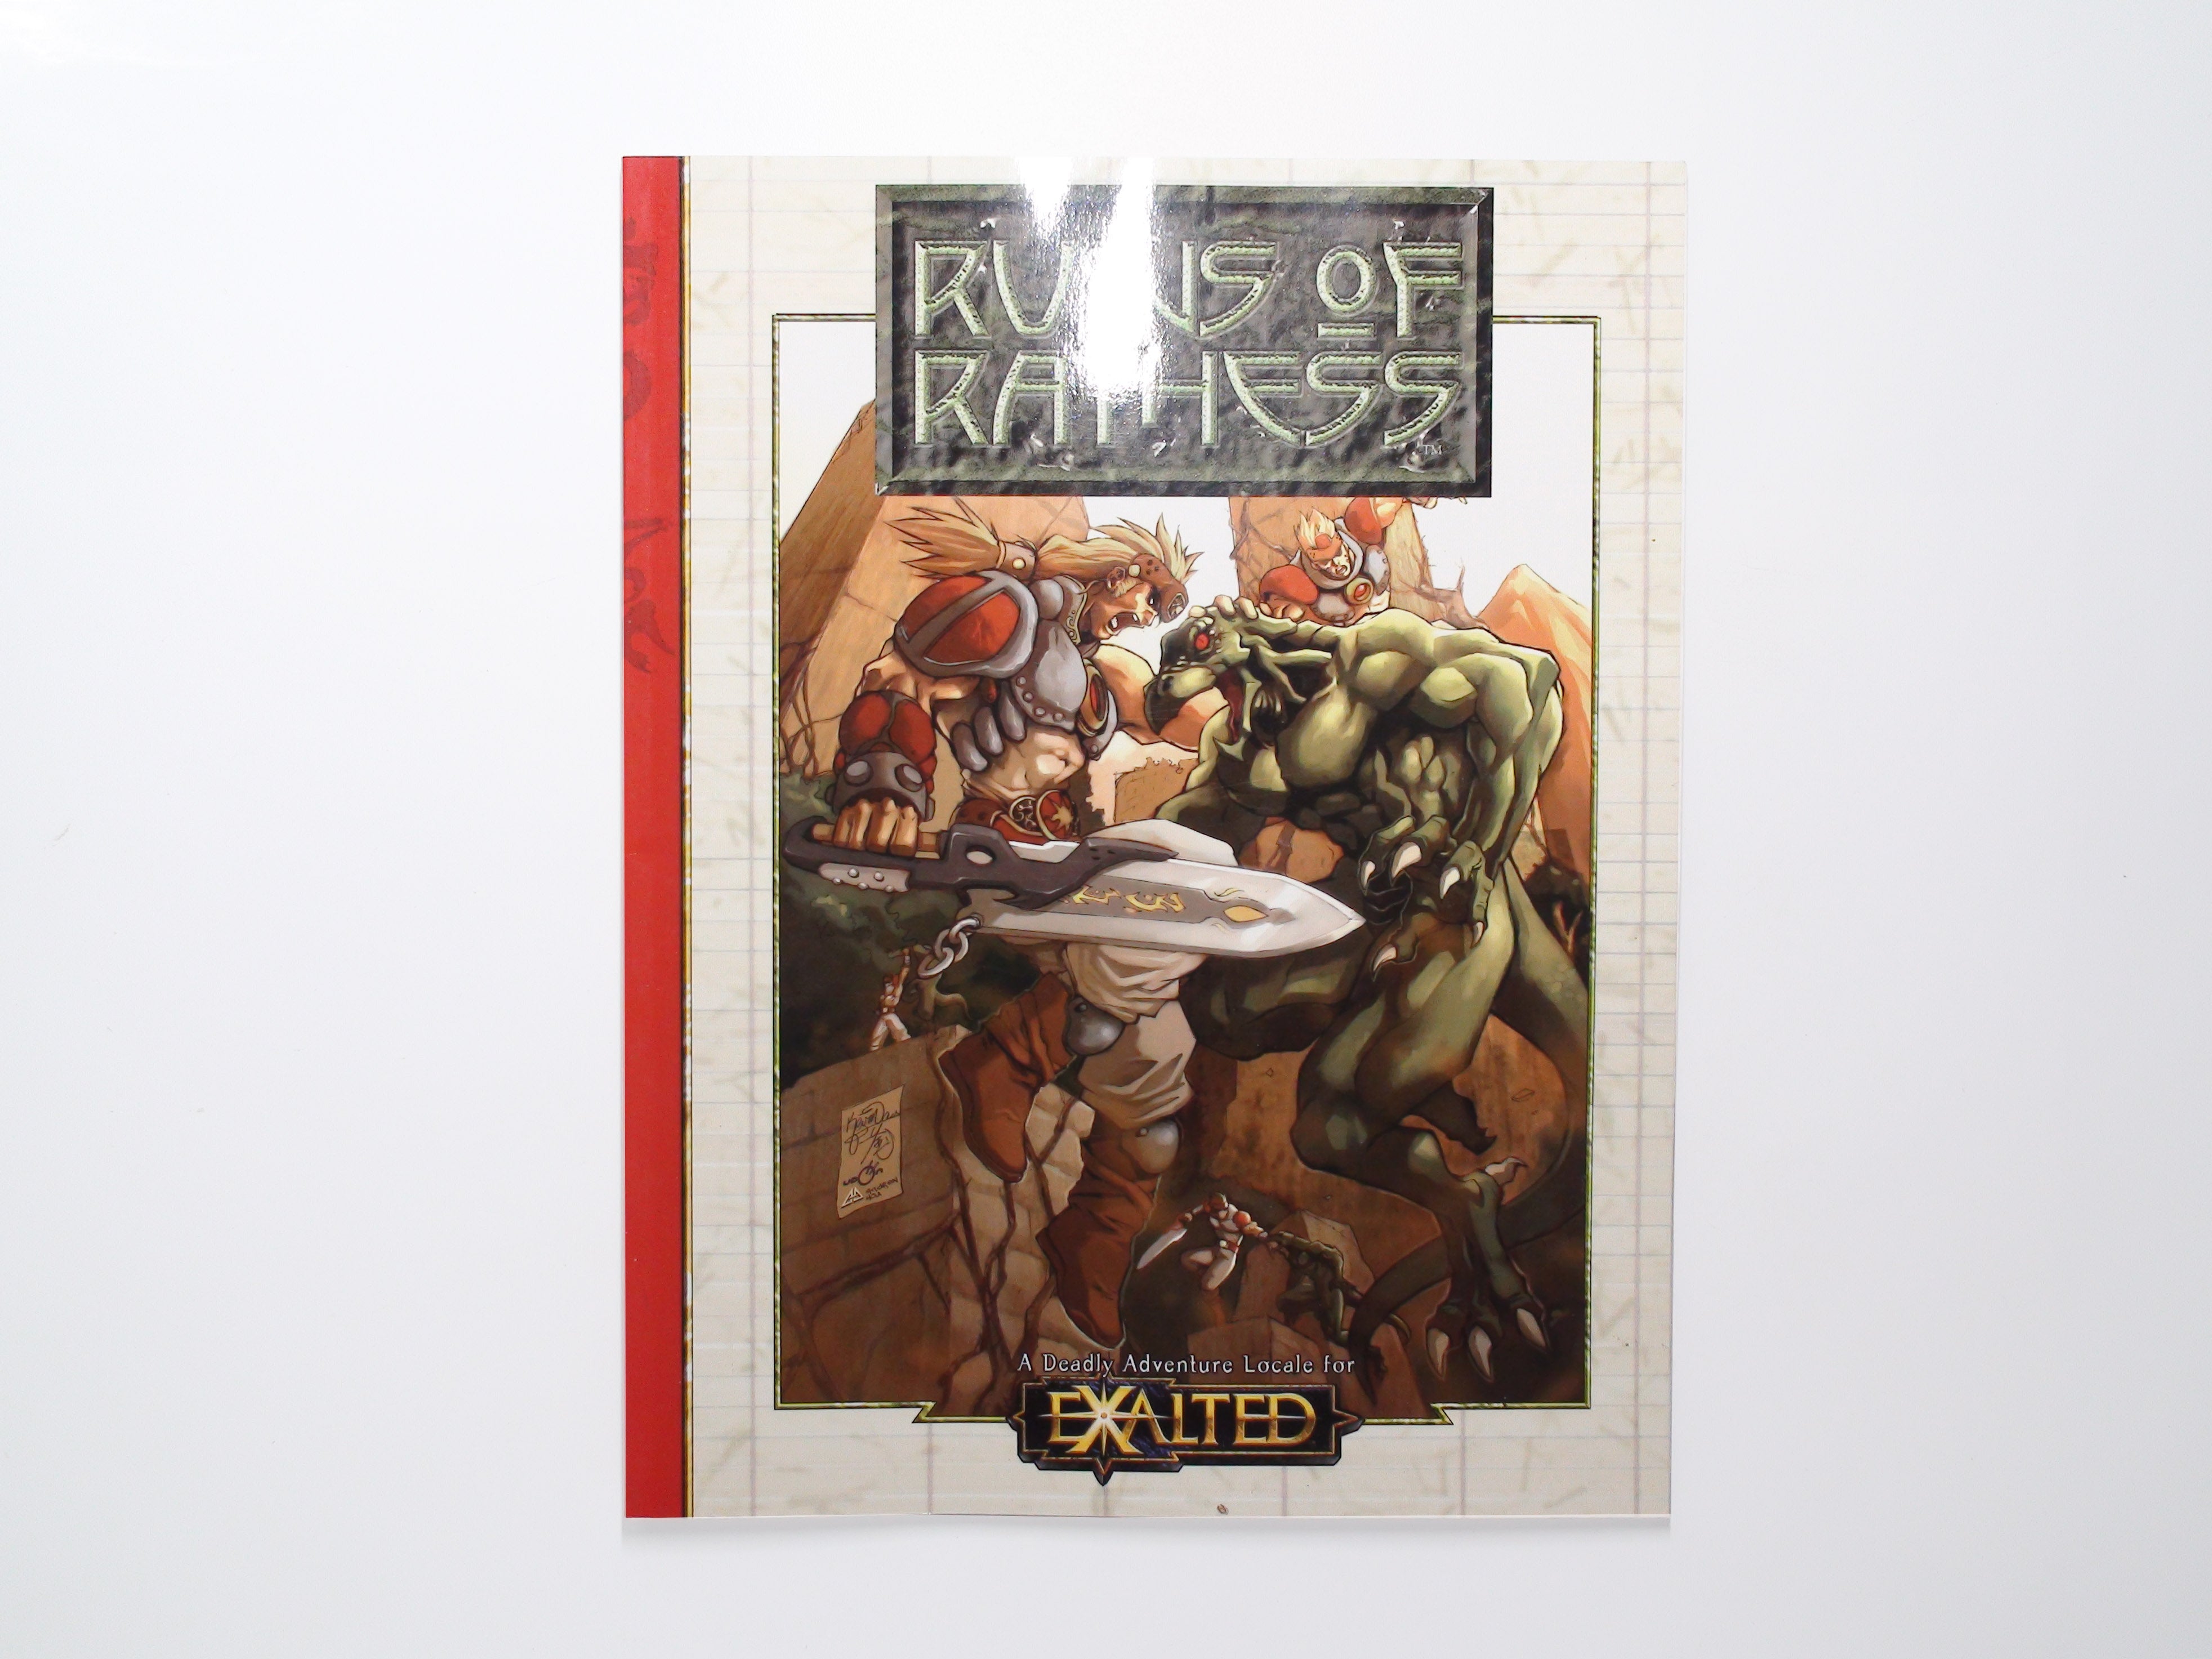 Ruins of Rathess, By James Maliszewski, Exalted, White Wolf, 1st Ed, RPG, 2003